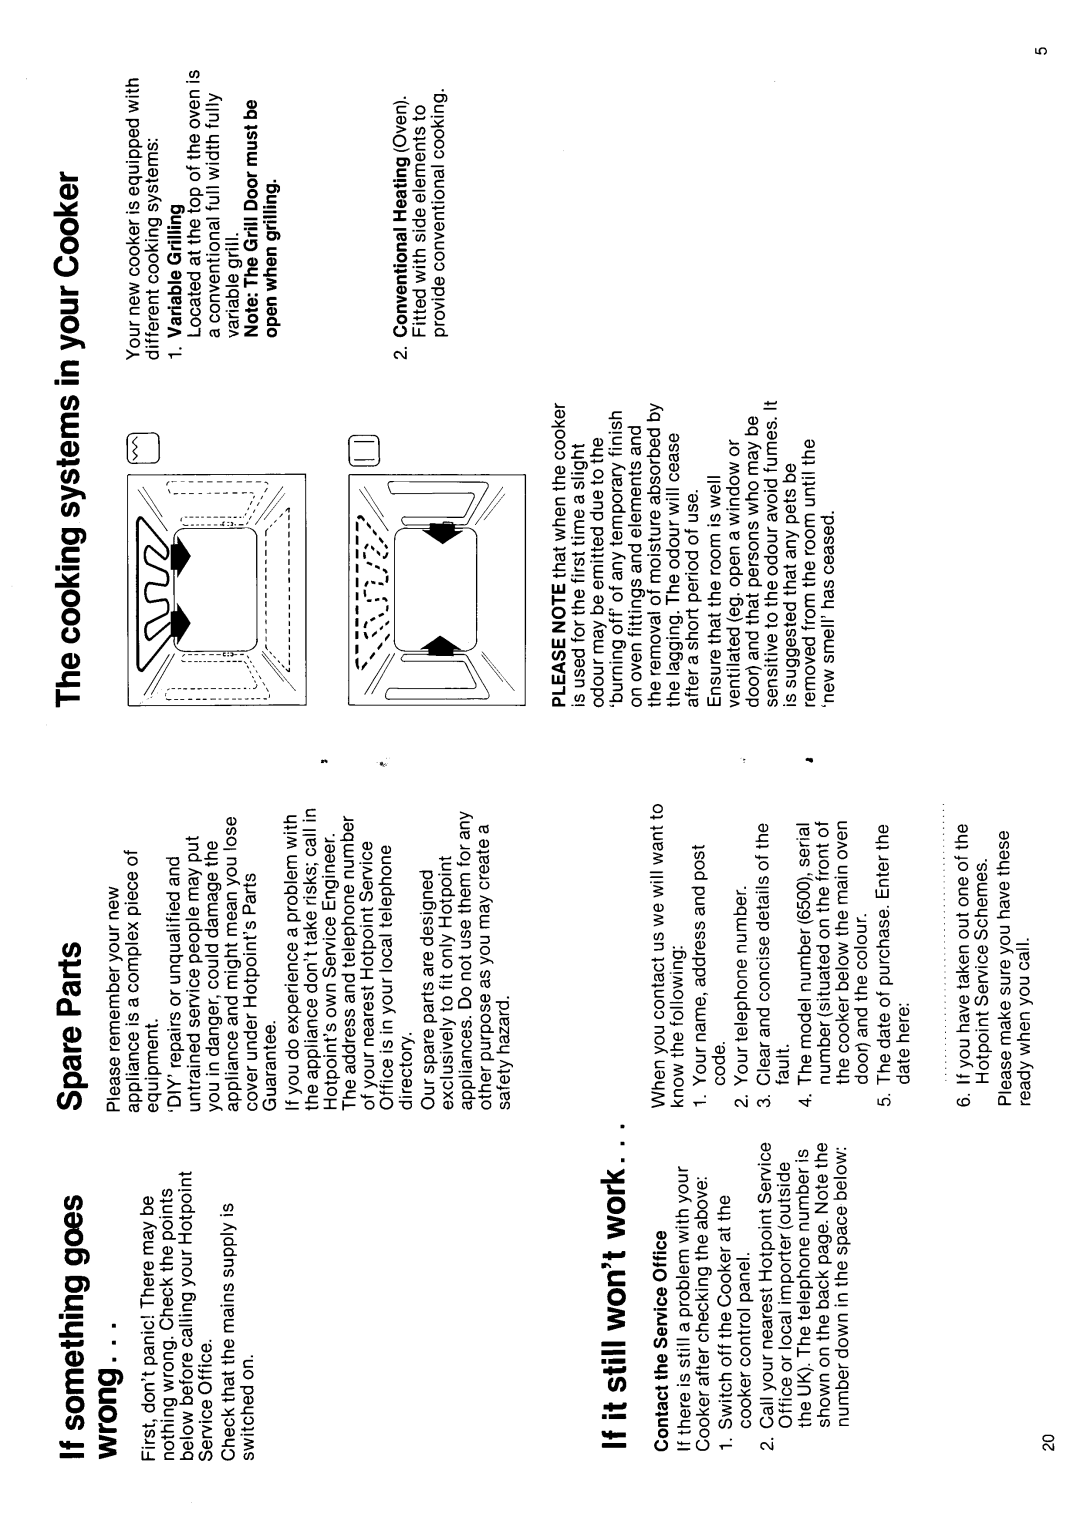 Hotpoint 6500 manual 